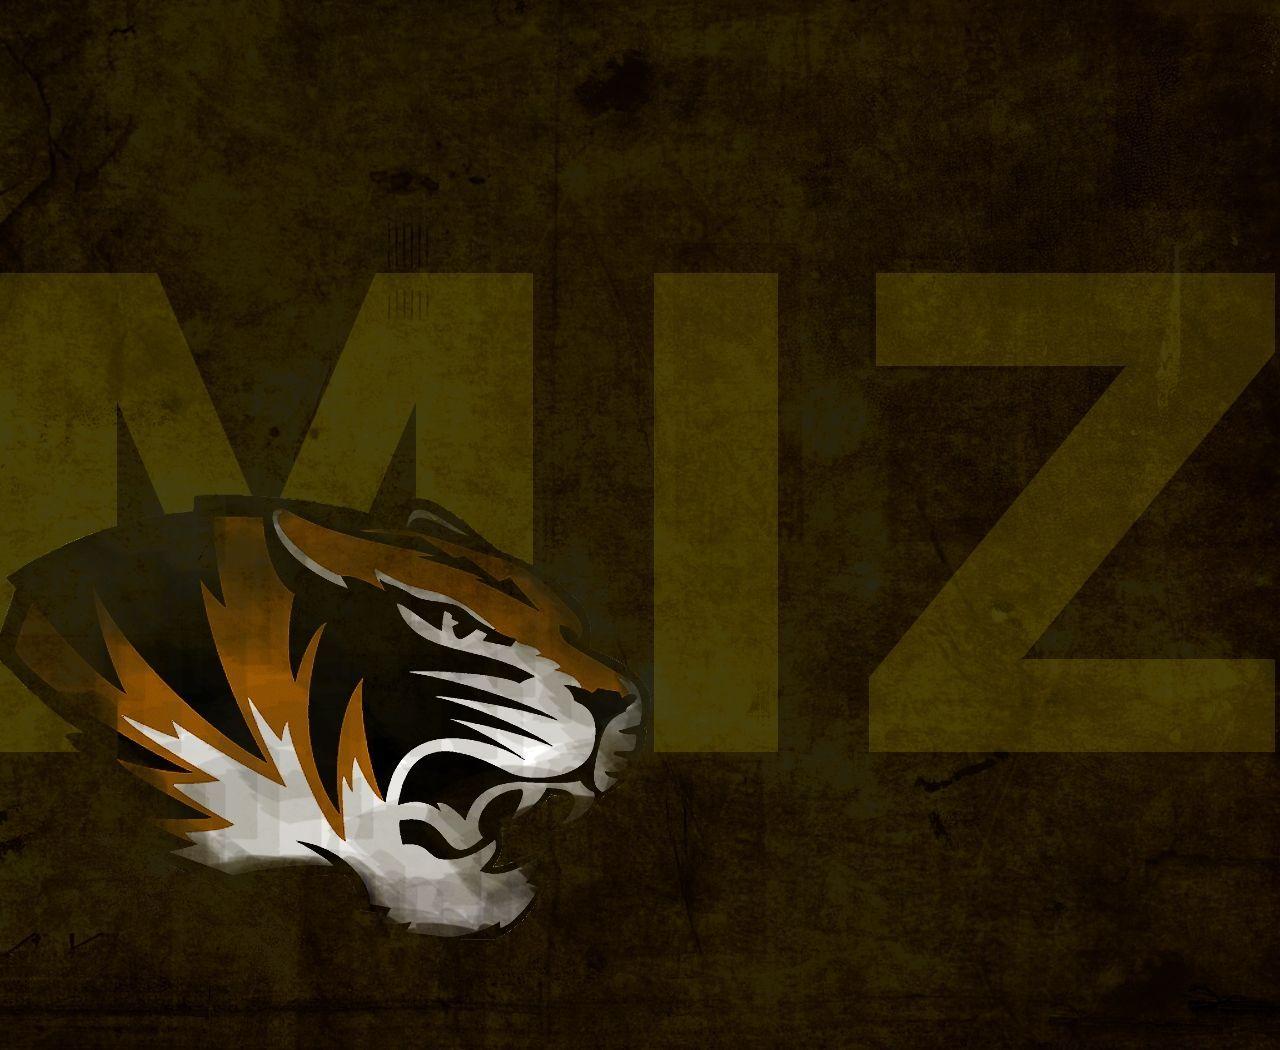 mizzou tigers. The Breakaway Tigers. Mizzou tigers, Mizzou, Missouri tigers